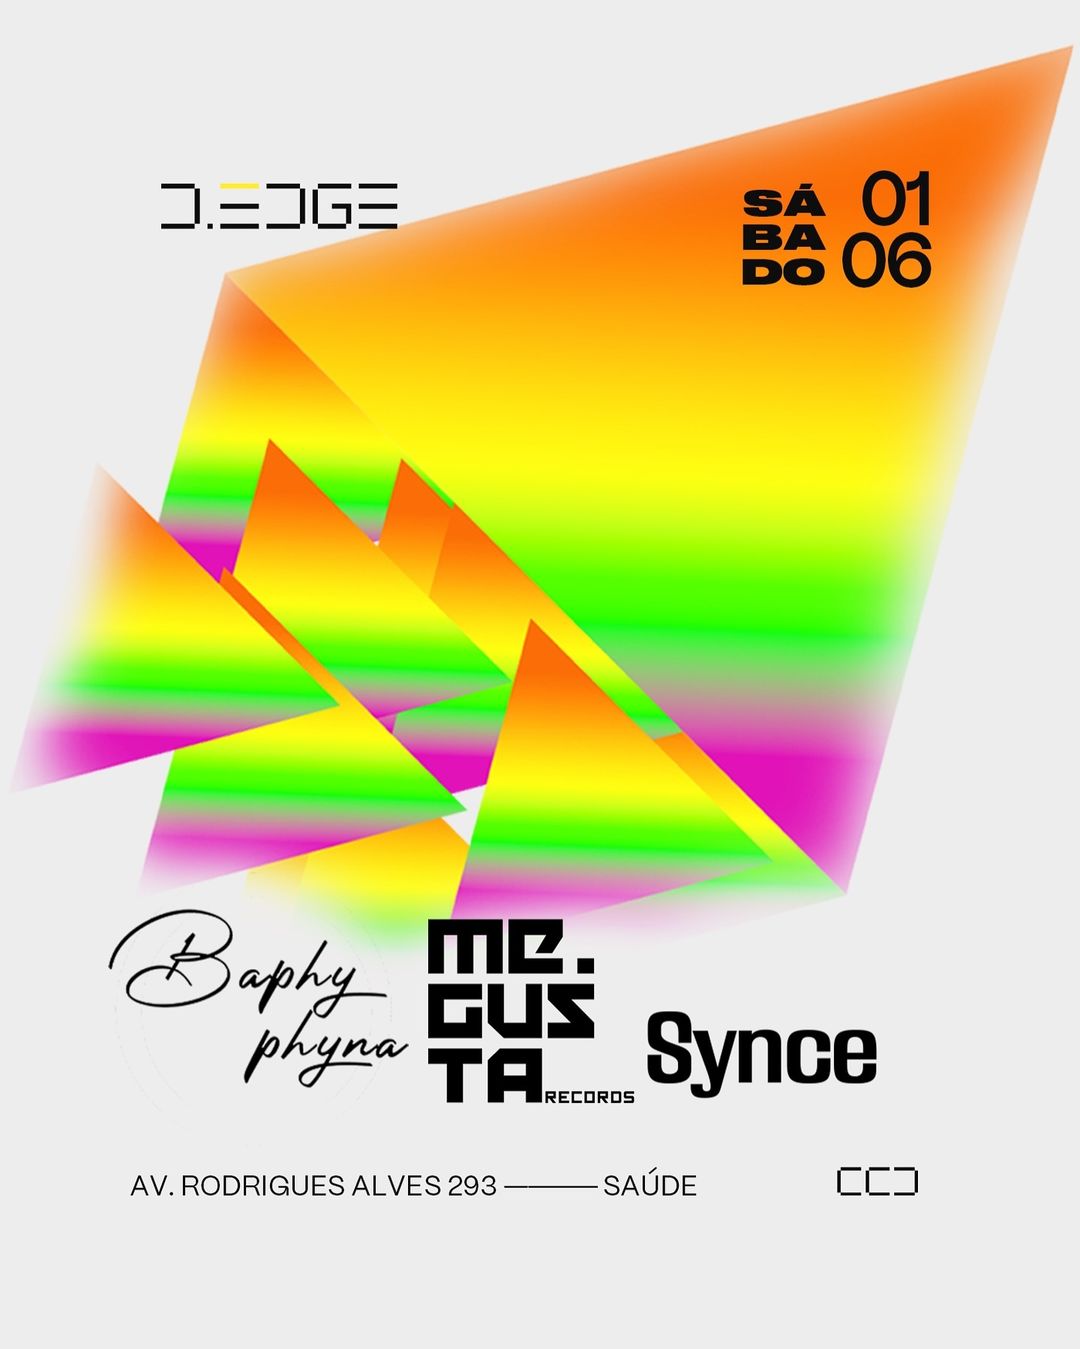 D-Edge Rio | TRINCA by Baphyphyna, Me Gusta & Synce